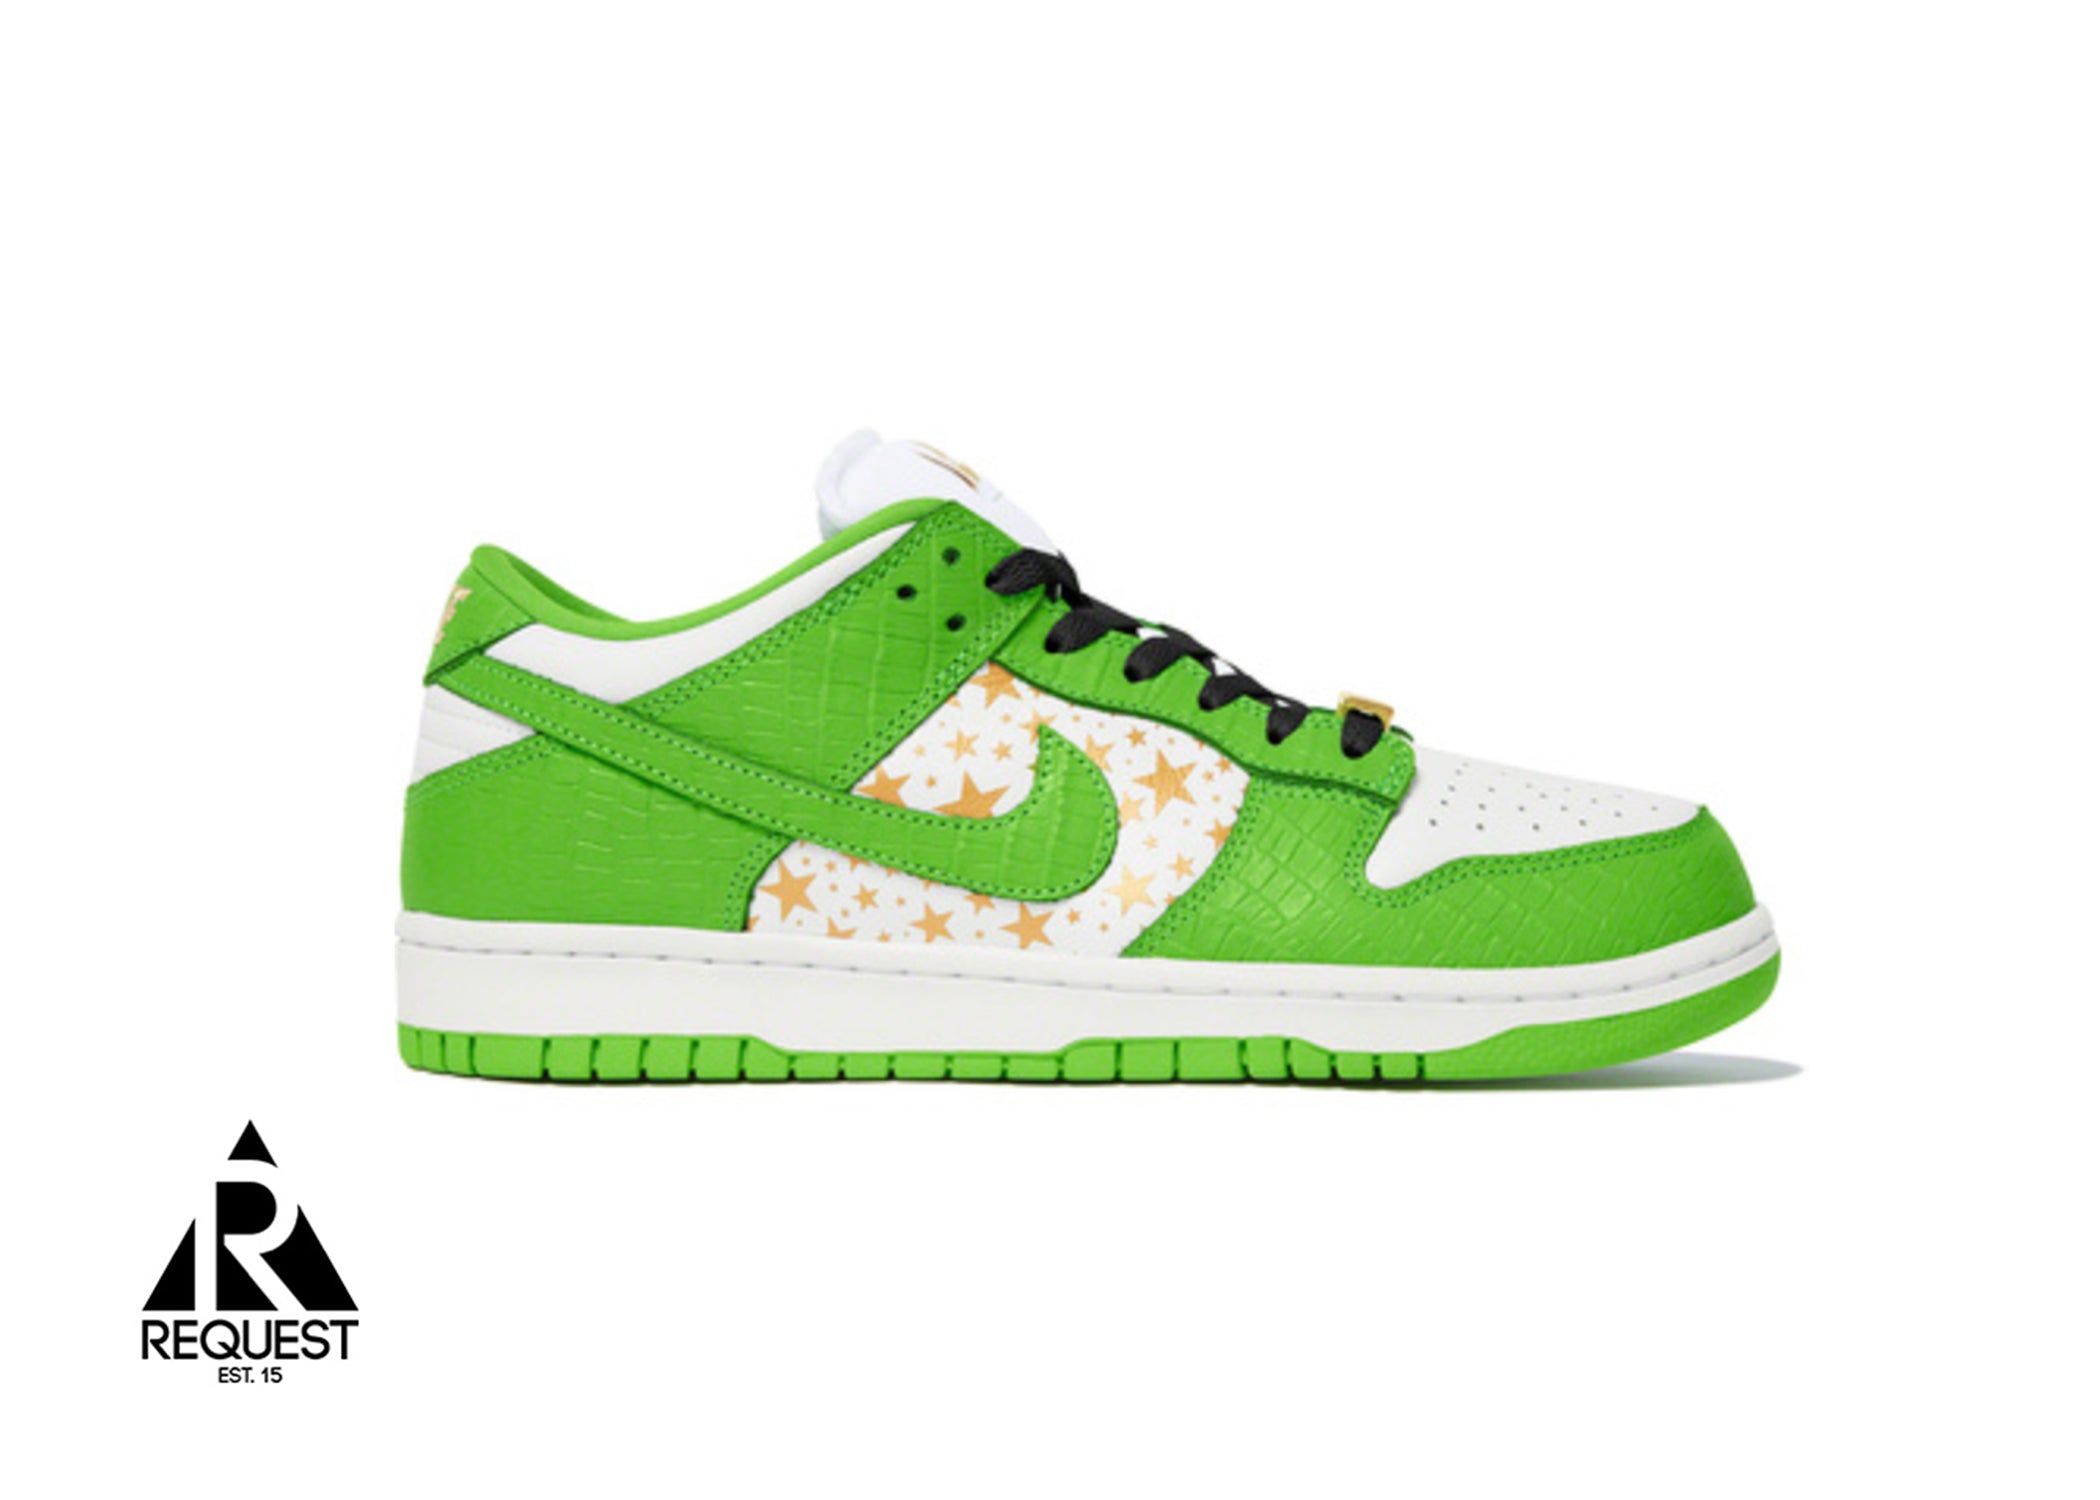 Nike SB Dunk Low Supreme Stars "Green" (2021)